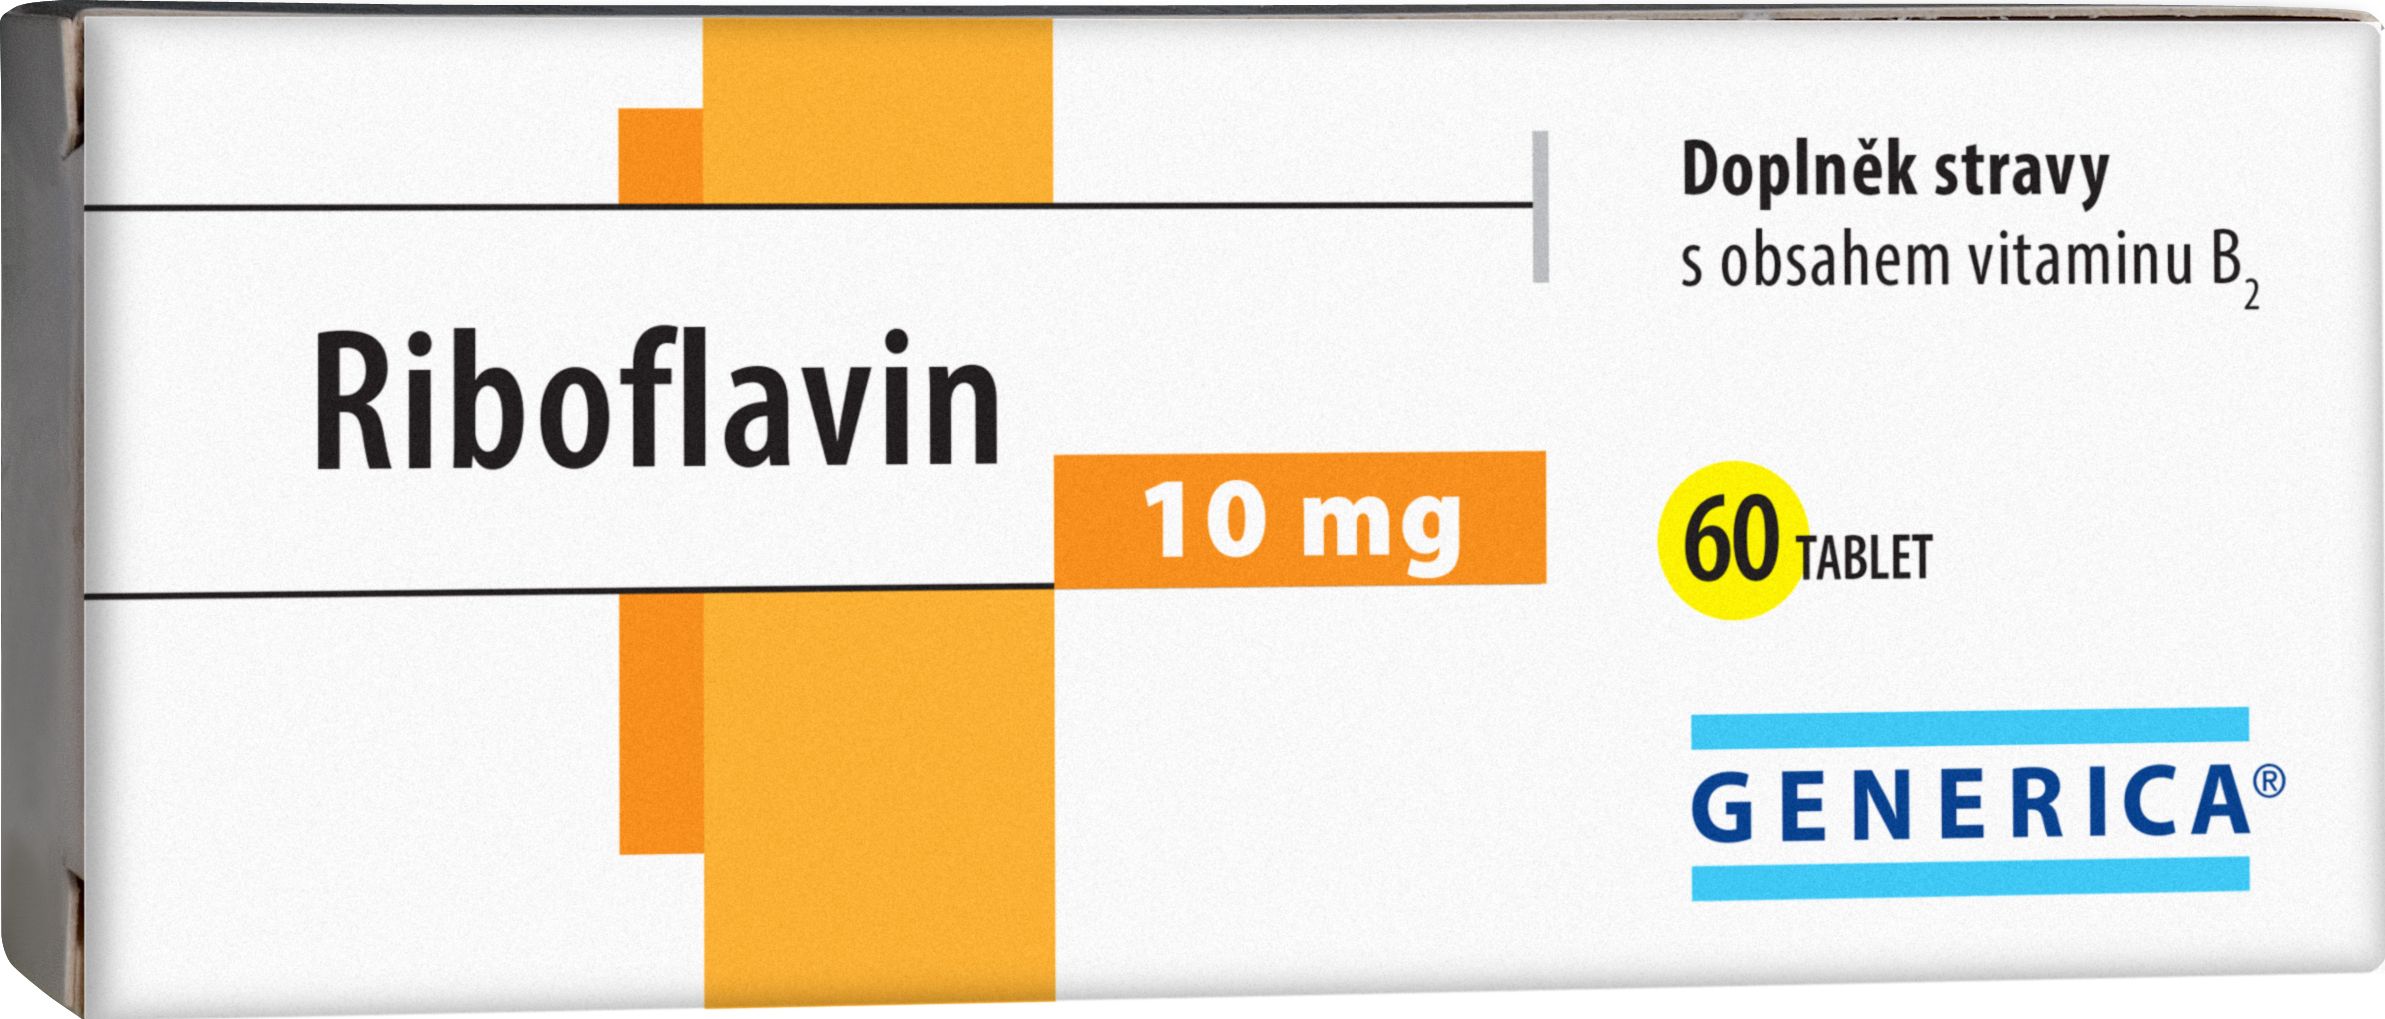 Generica Riboflavin 60 tablet Generica